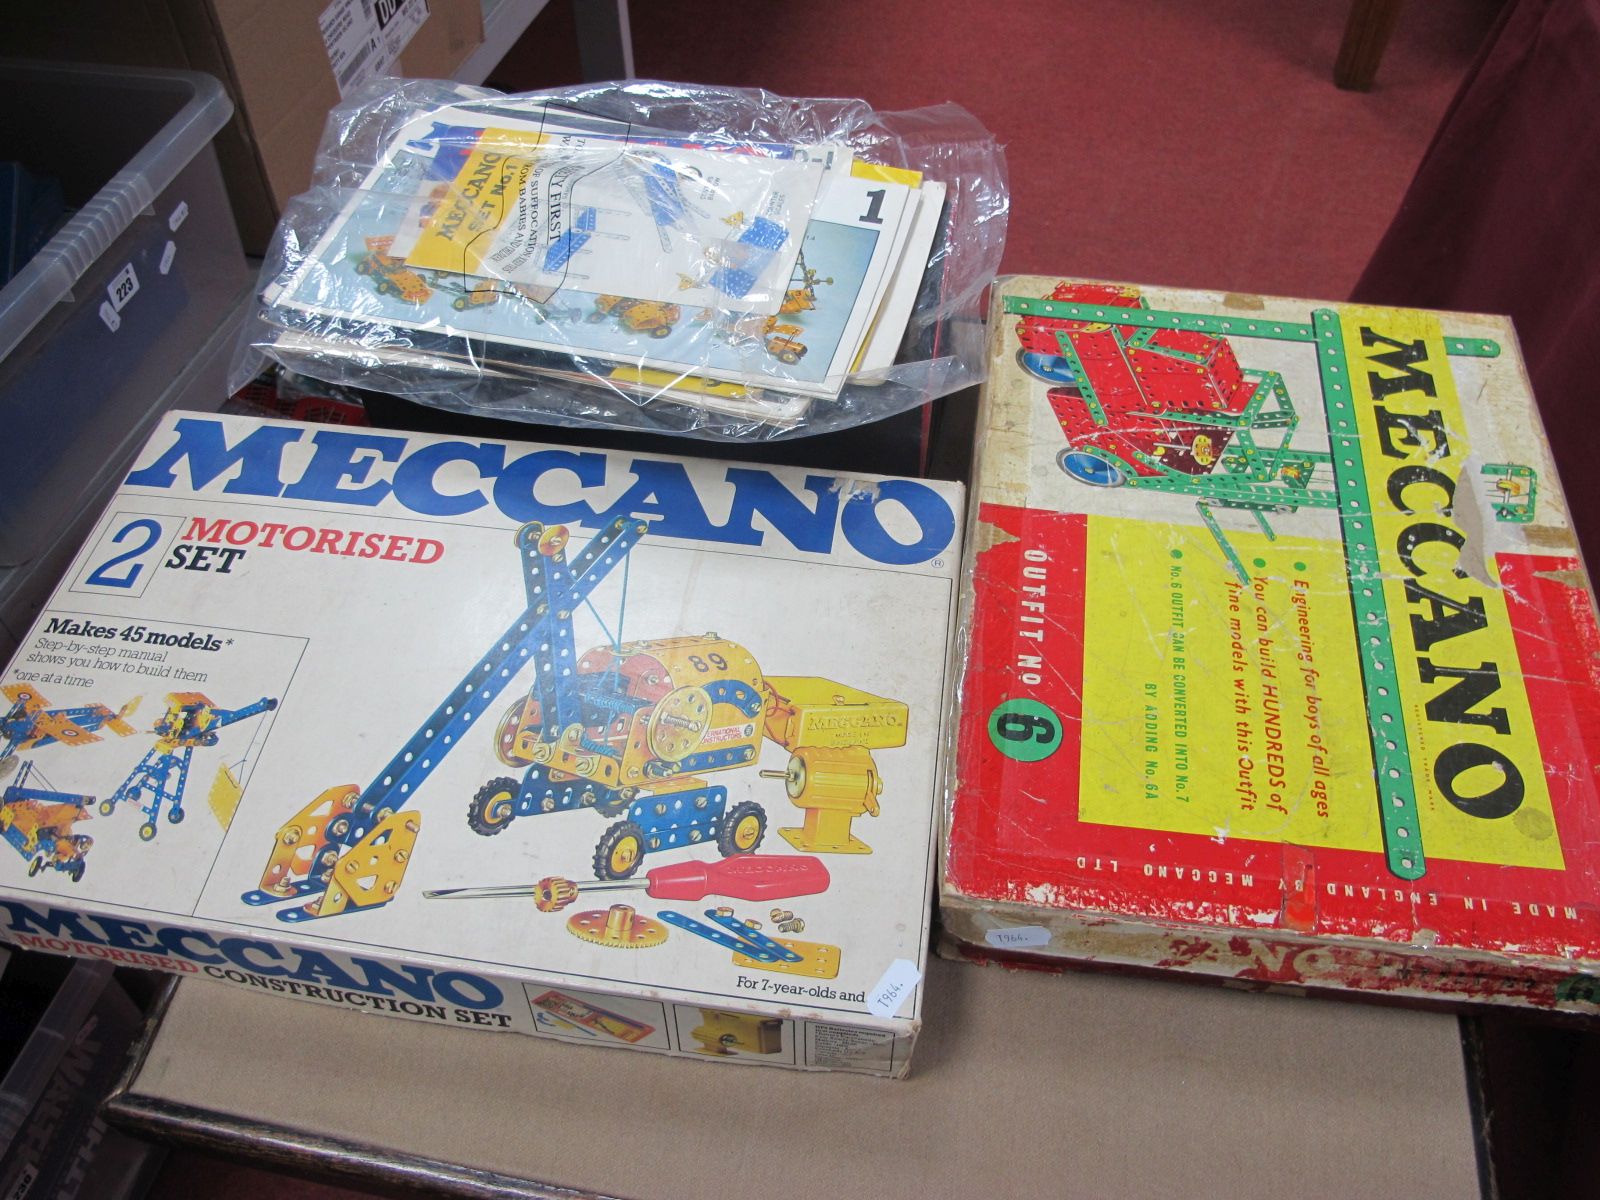 A 1960's Meccano Set No 6 and a 1970's Meccano Motorised Set No 2, both boxed, playworn, unchecked